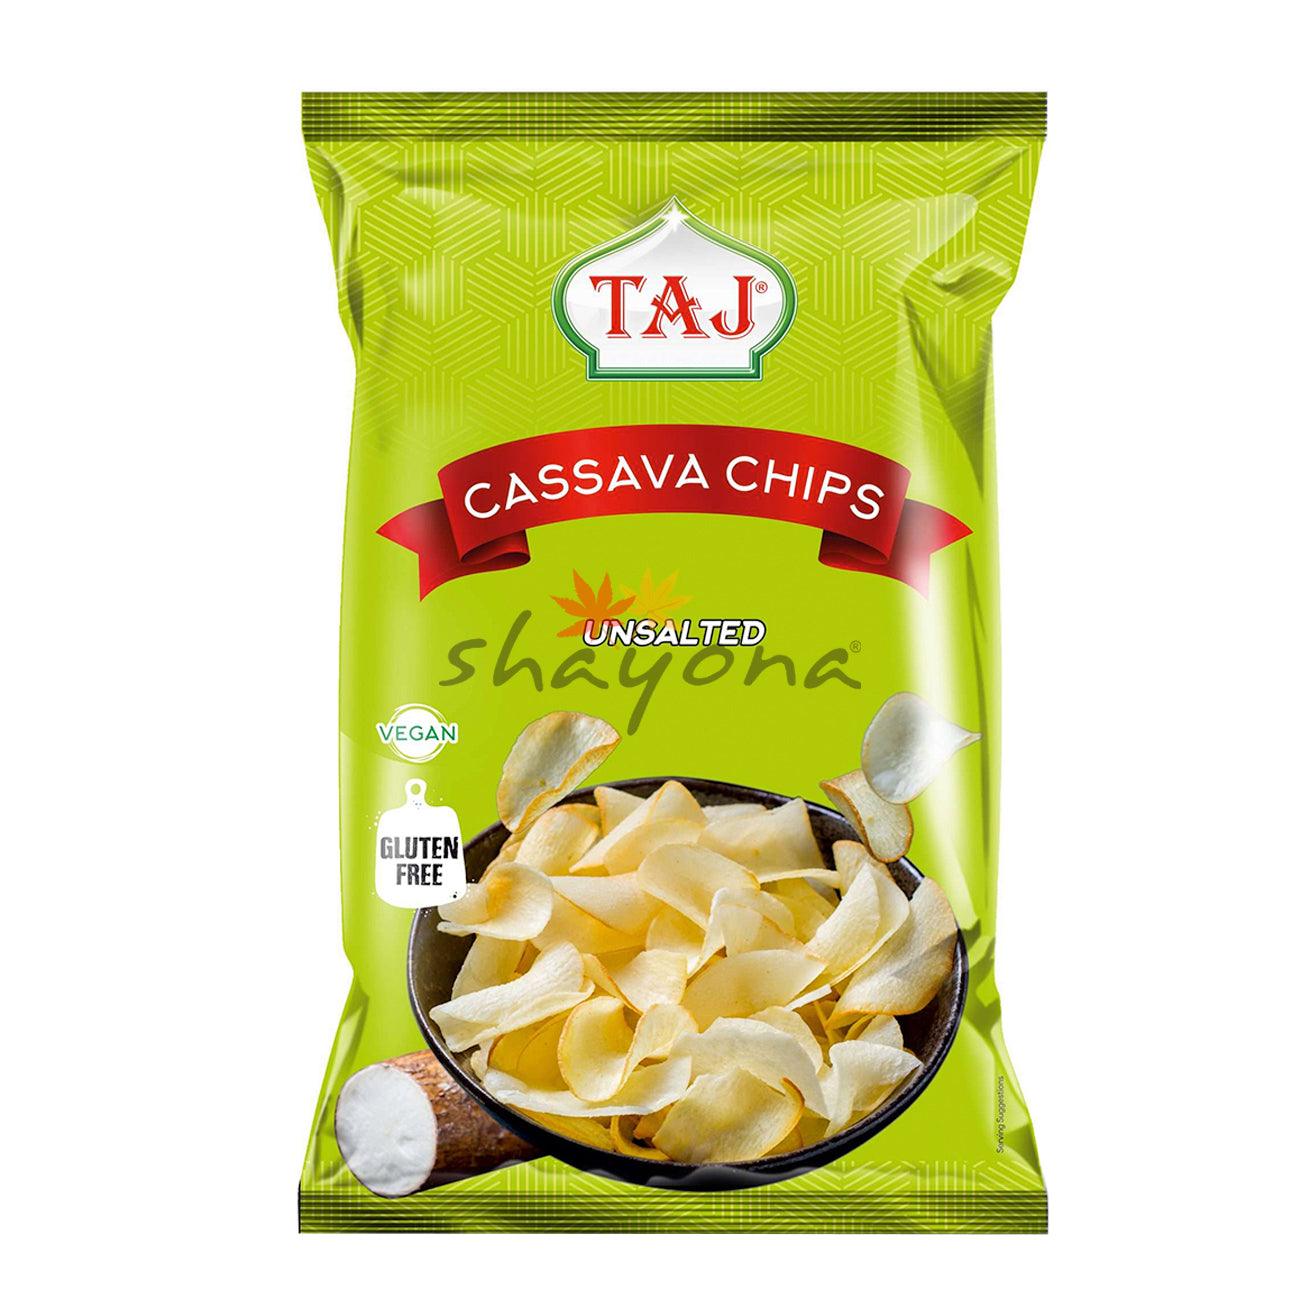 Taj Cassava Chips - Unsalted - Shayona UK